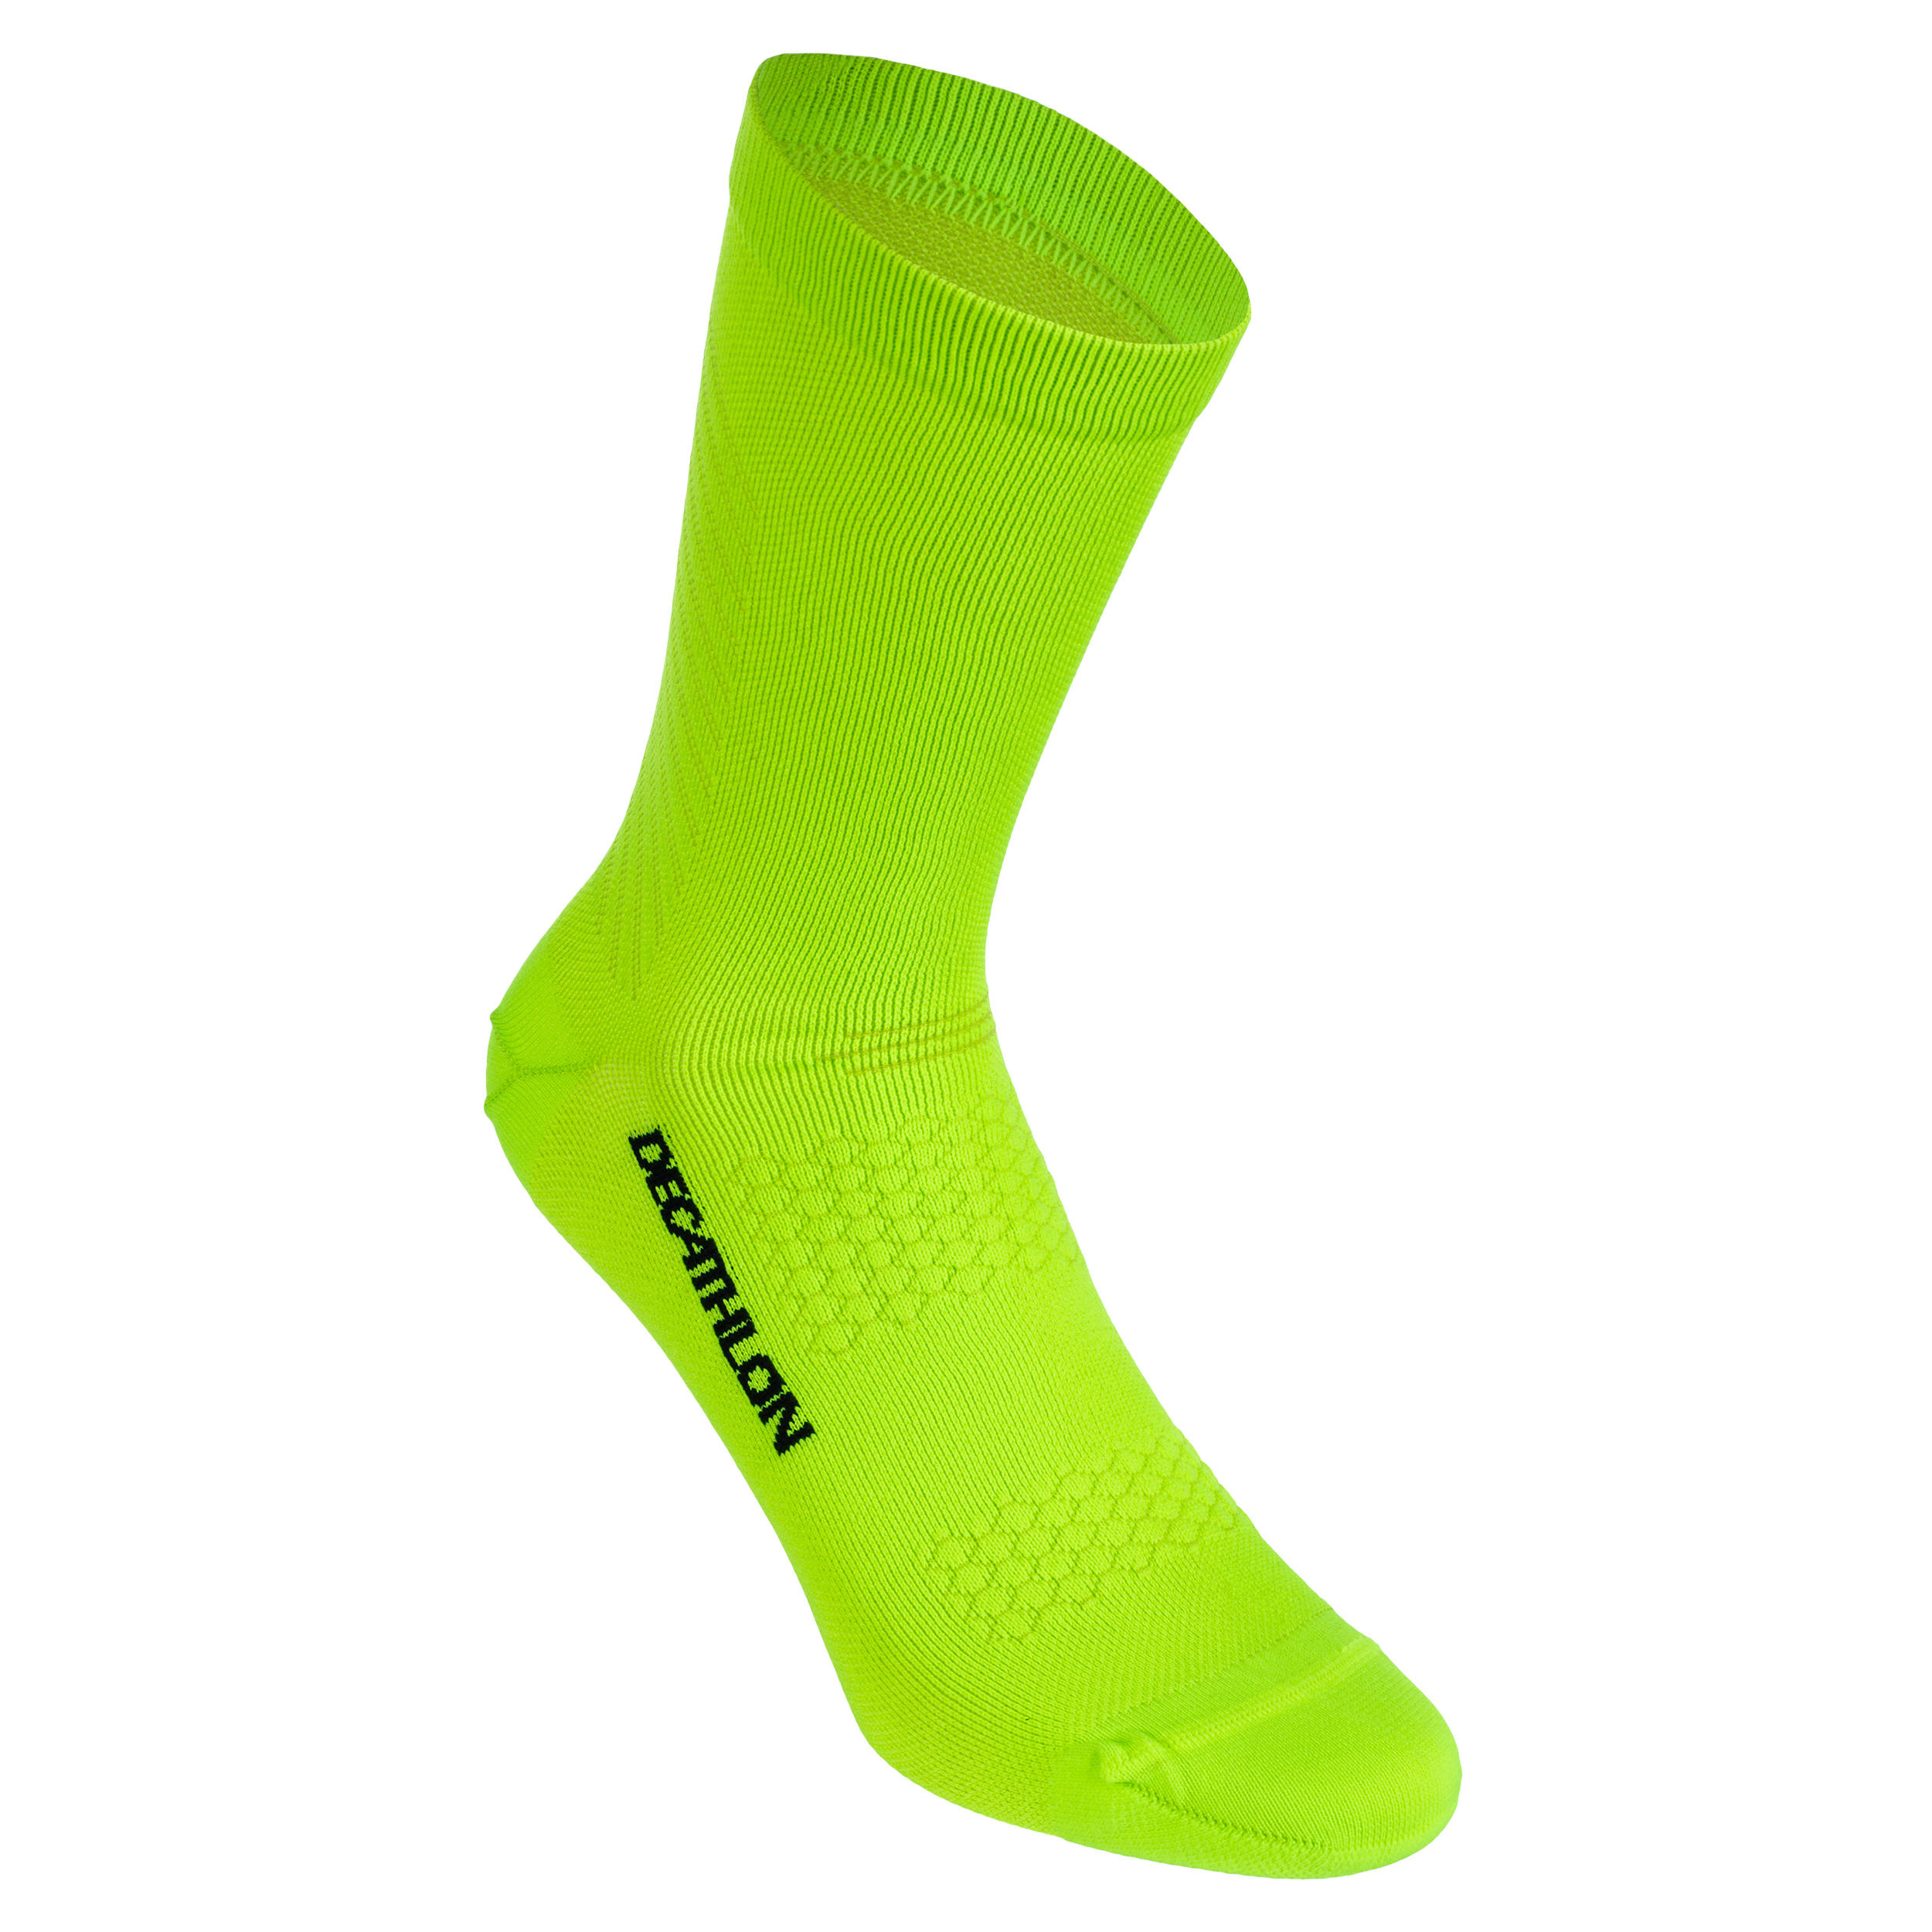 900 Road Sport Cycling Socks - Neon Yellow 2/3